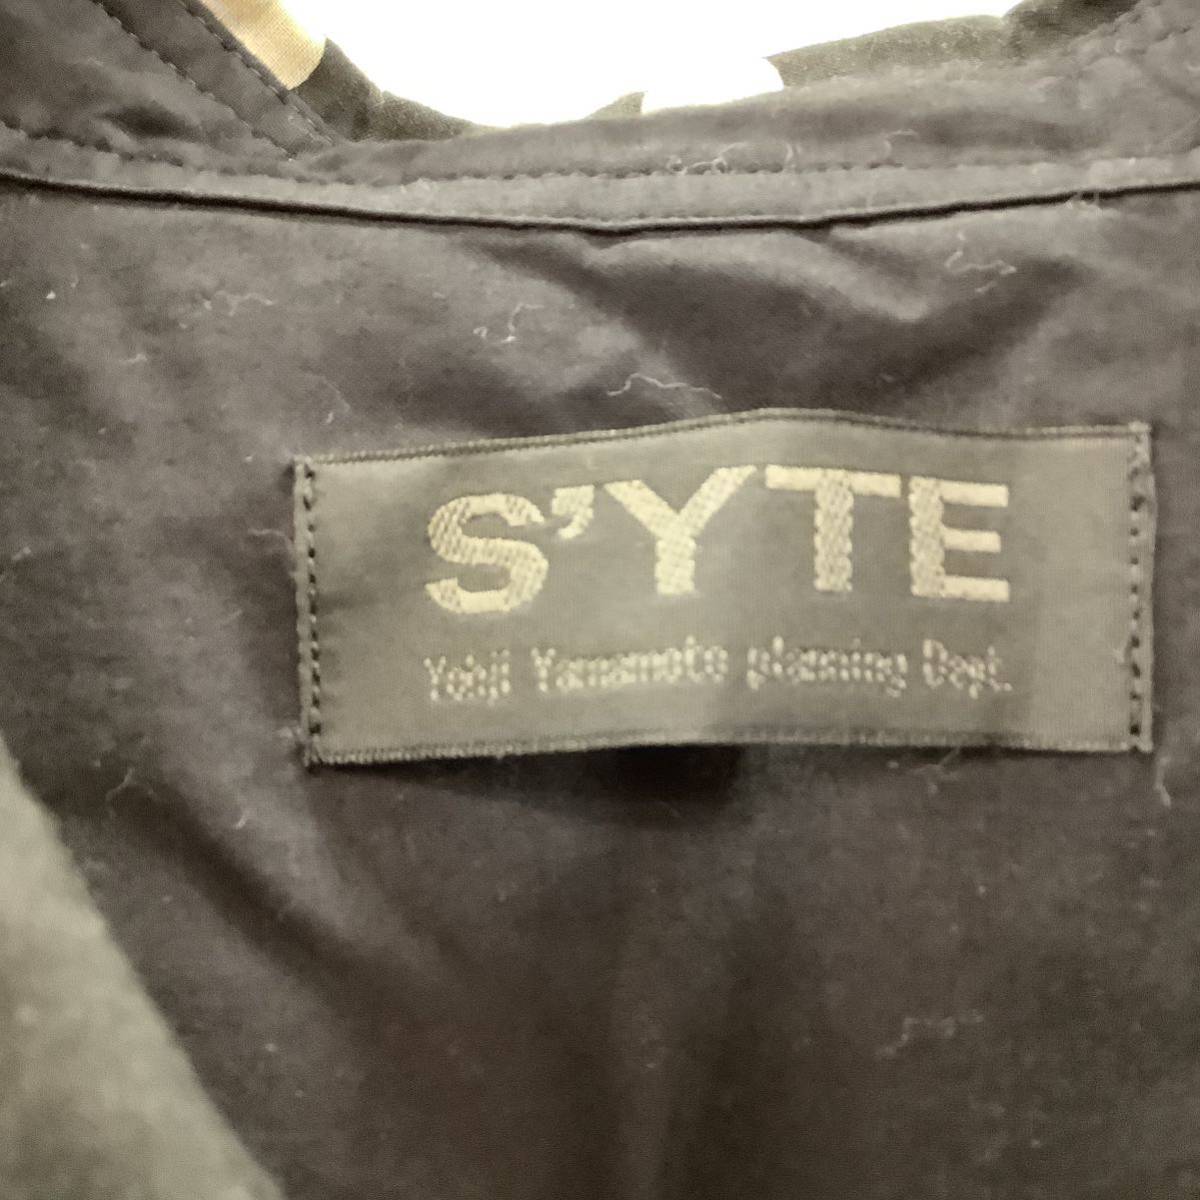 S'YTE by Yohji Yamamoto サイトバイヨウジヤマモト ドットストライプパネルシャツ 長袖 size 3 黒 78253